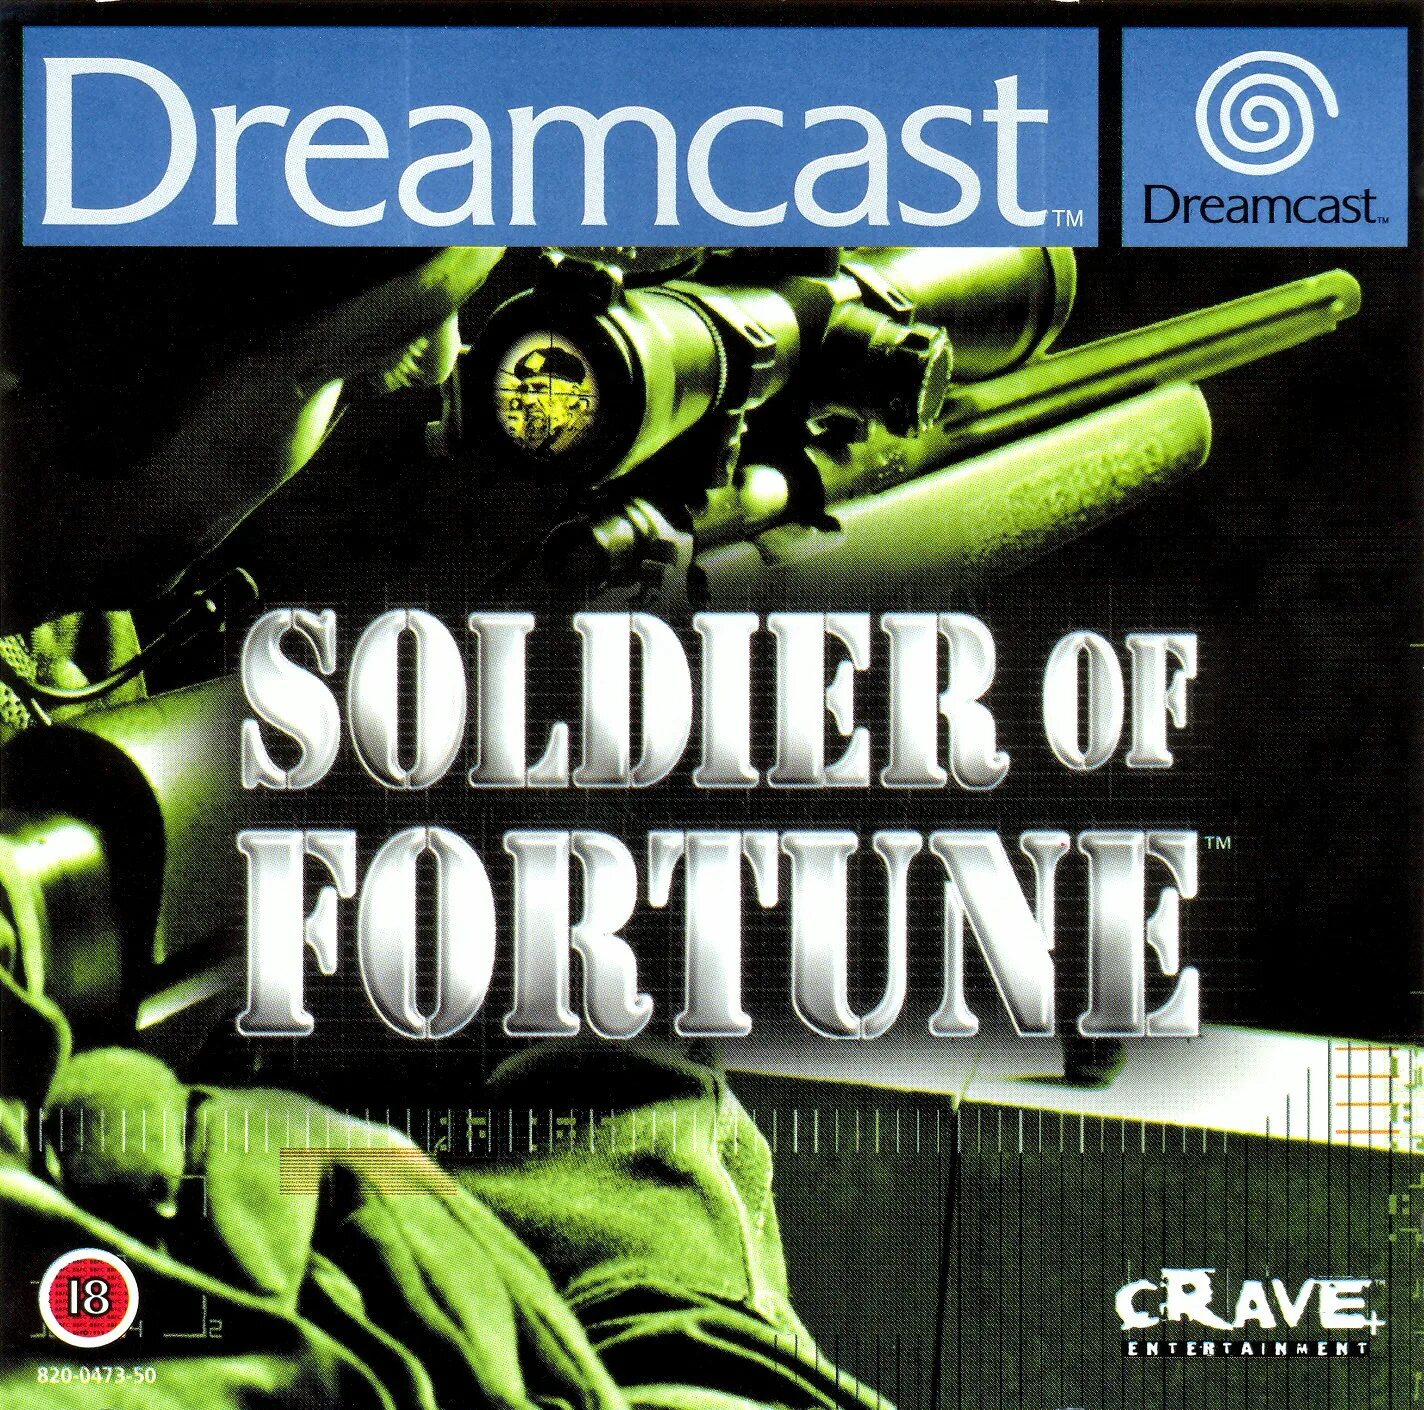 Soldier of Fortune игра Dreamcast. Sega Dreamcast Soldier of Fortune. Солдаты удачи игра сега. Soldiers игра Dreamcast. Дип перпл солдаты фортуны